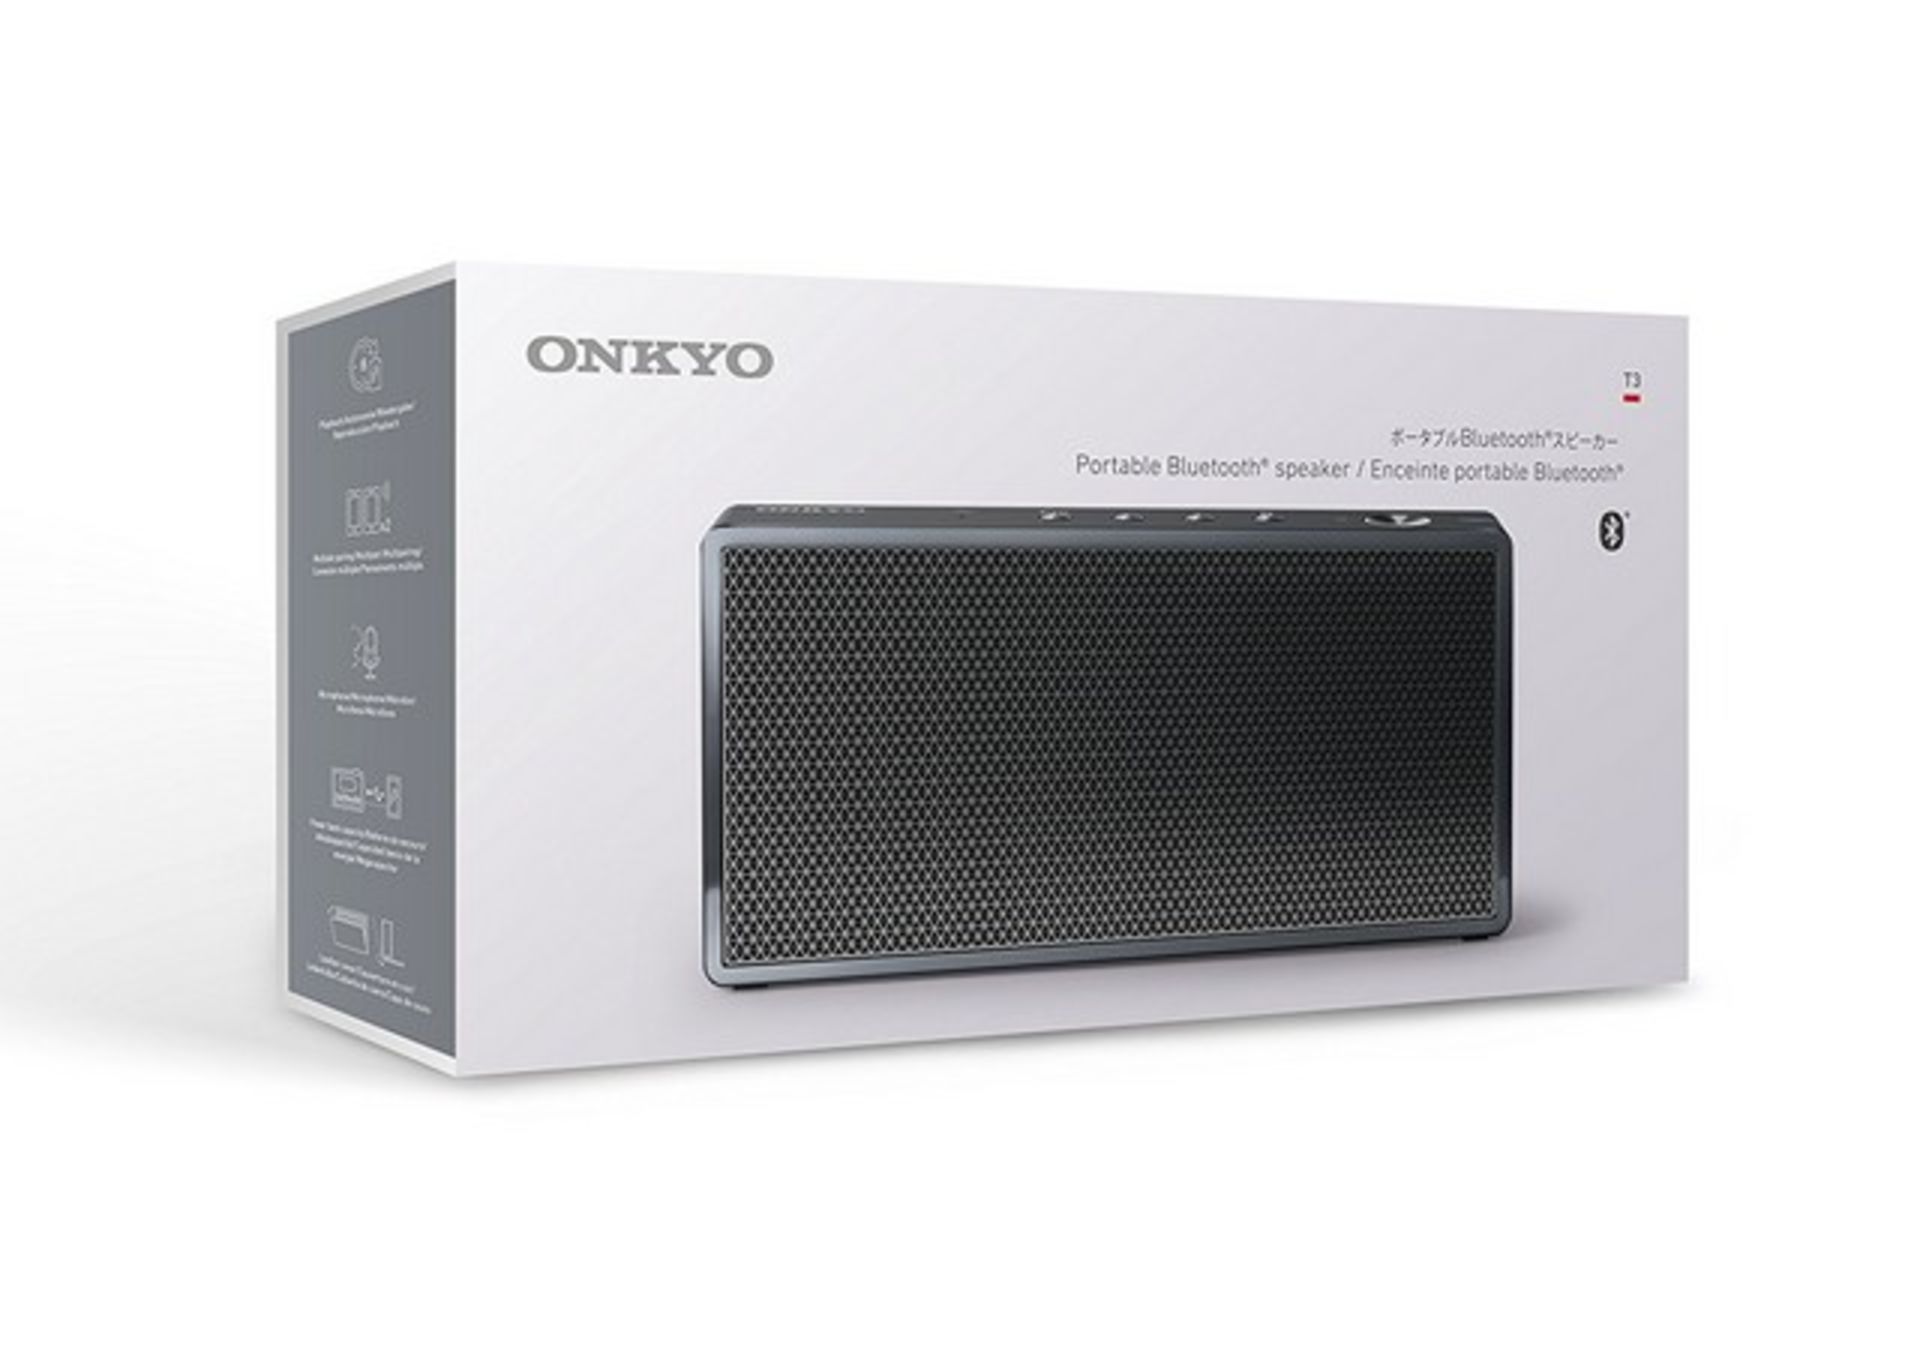 + VAT Brand New Onkyo T3 Lightweight Portable Bluetooth Speaker - Amazon Price £109.00 - 8 Hour - Image 3 of 4